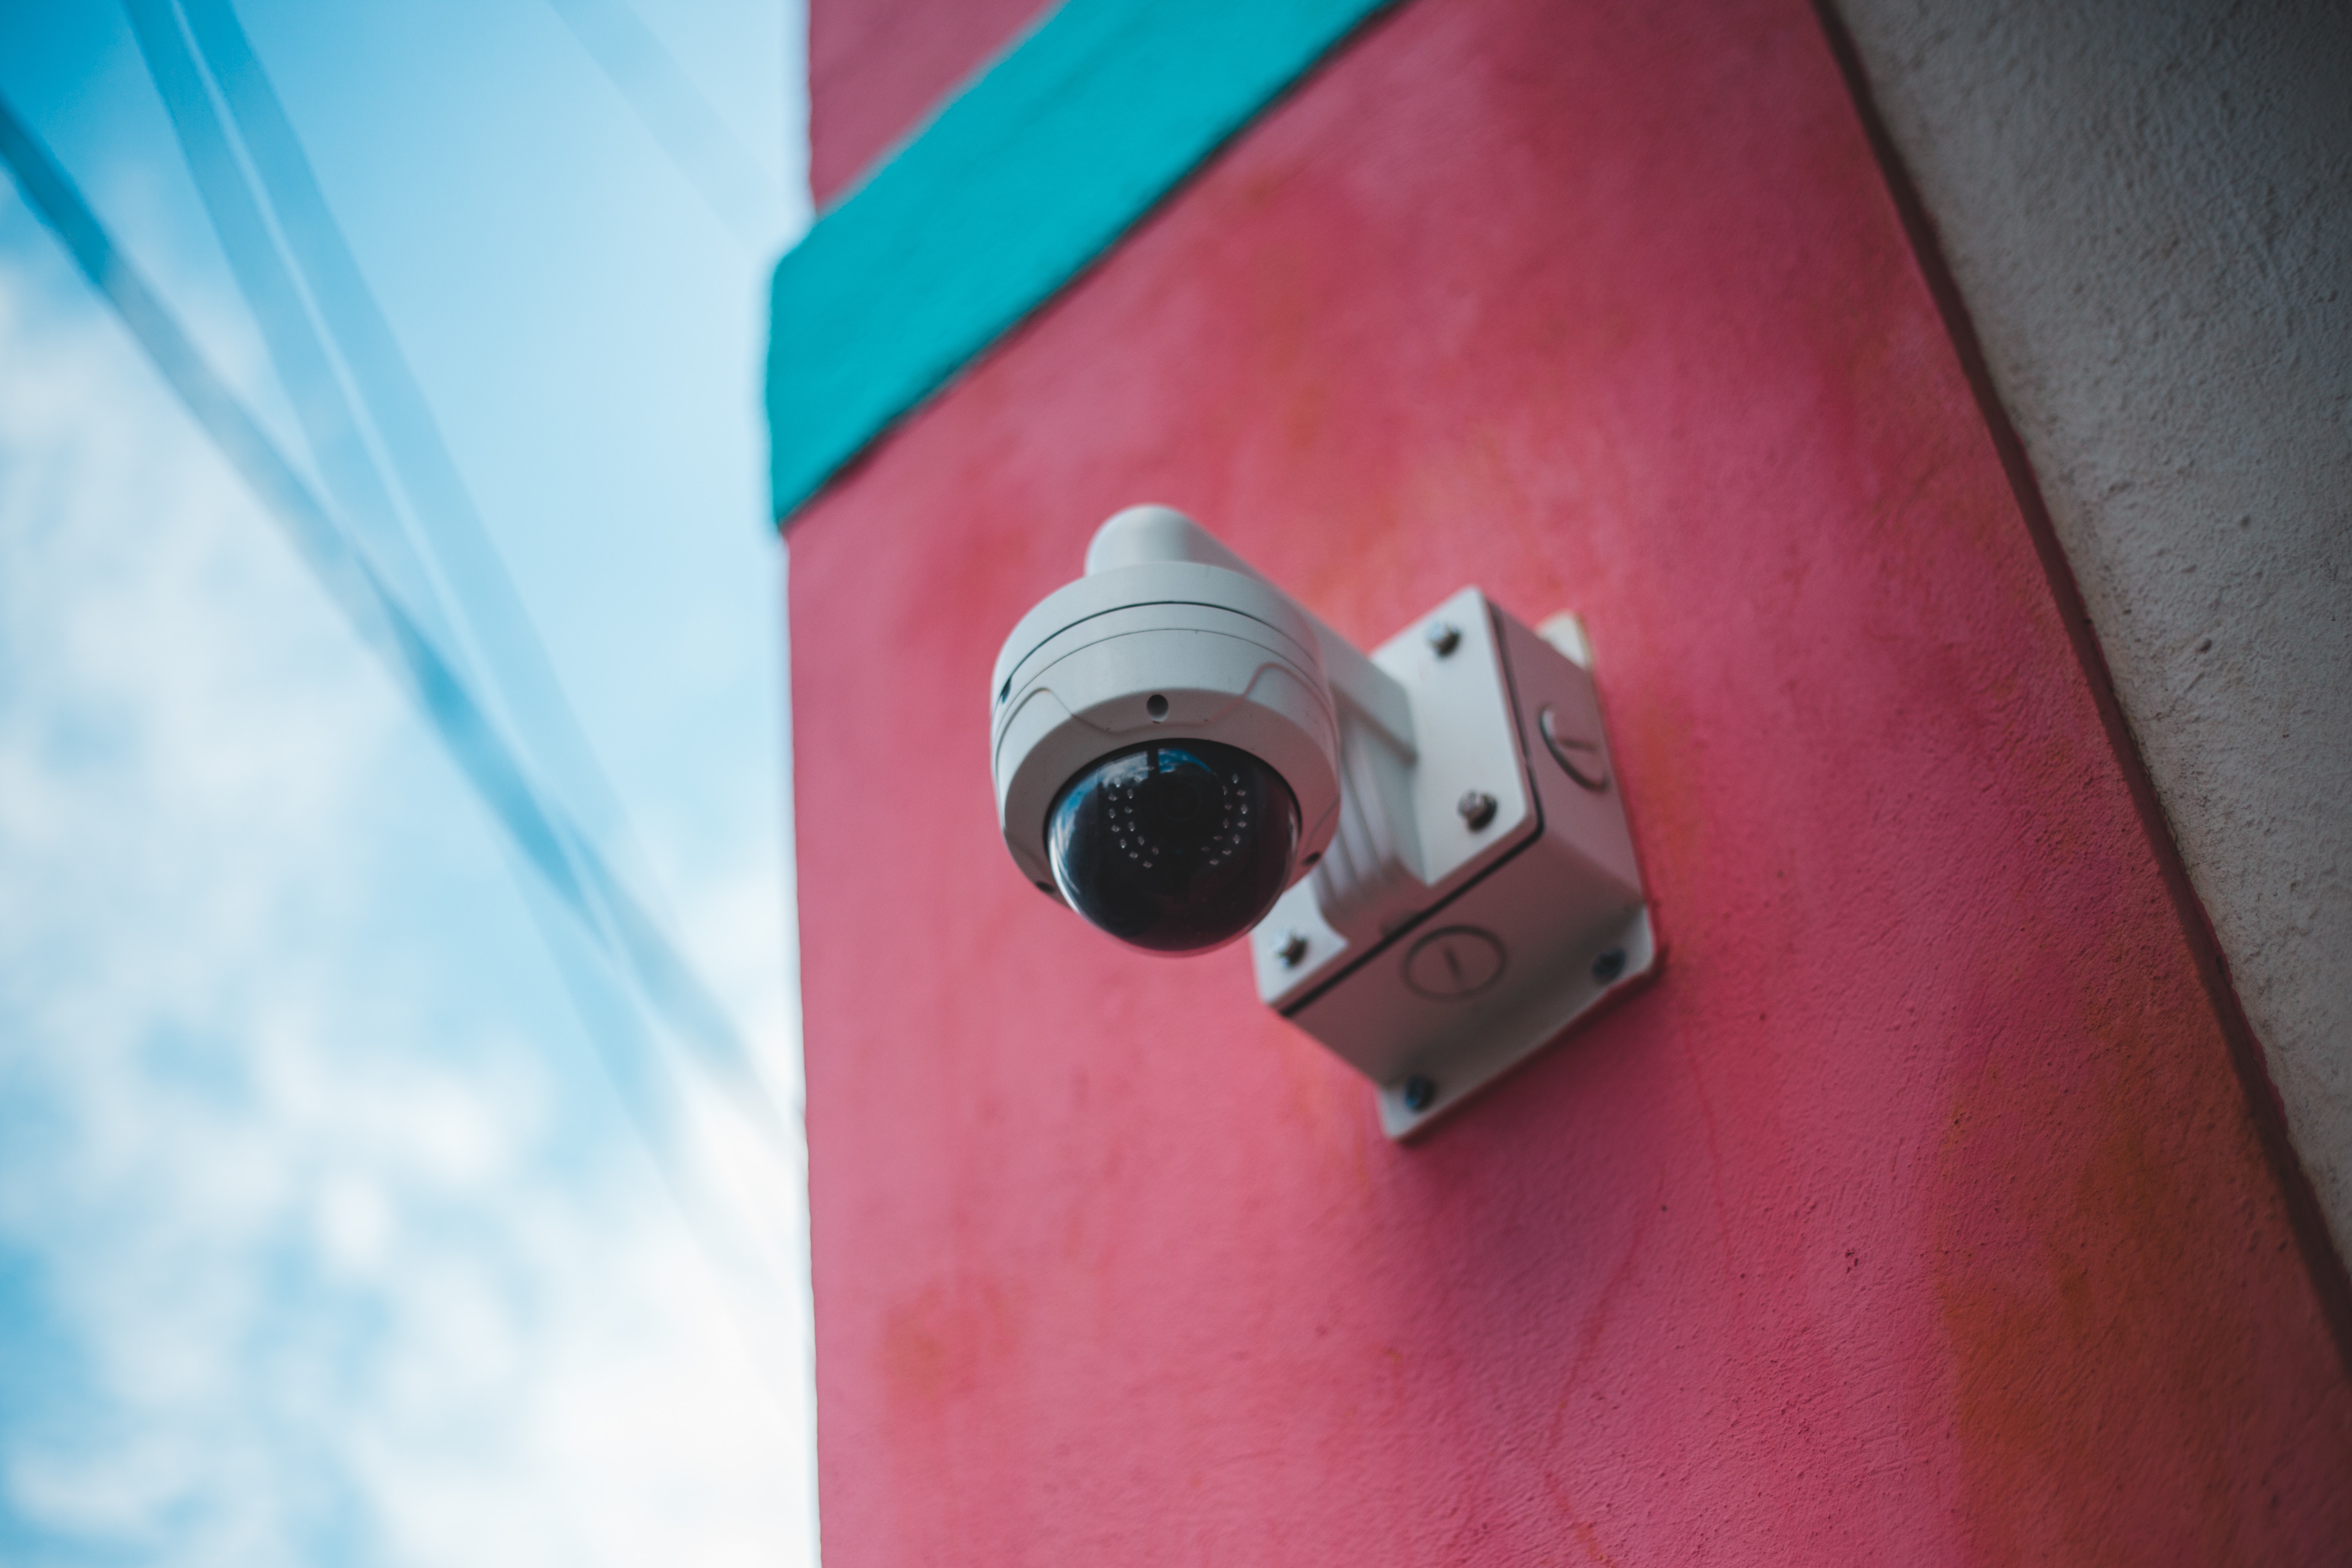 Image of a CCTV camera